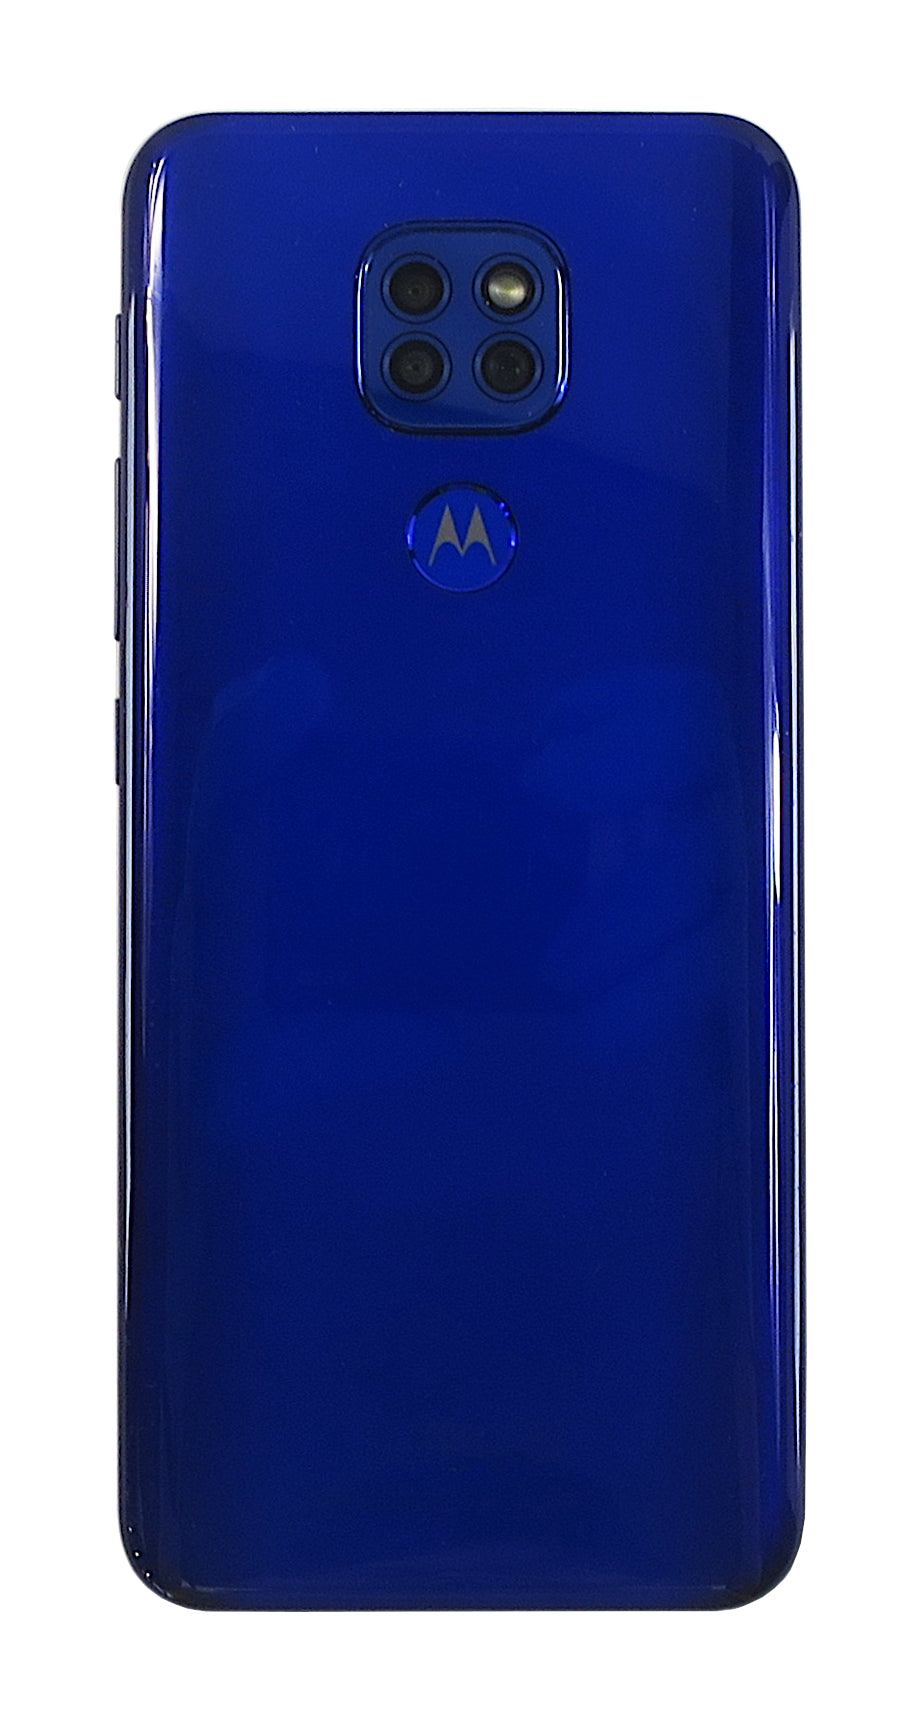 Motorola Moto G9 Play Smartphone, 64GB, Network Unlocked, Blue, XT2083-3